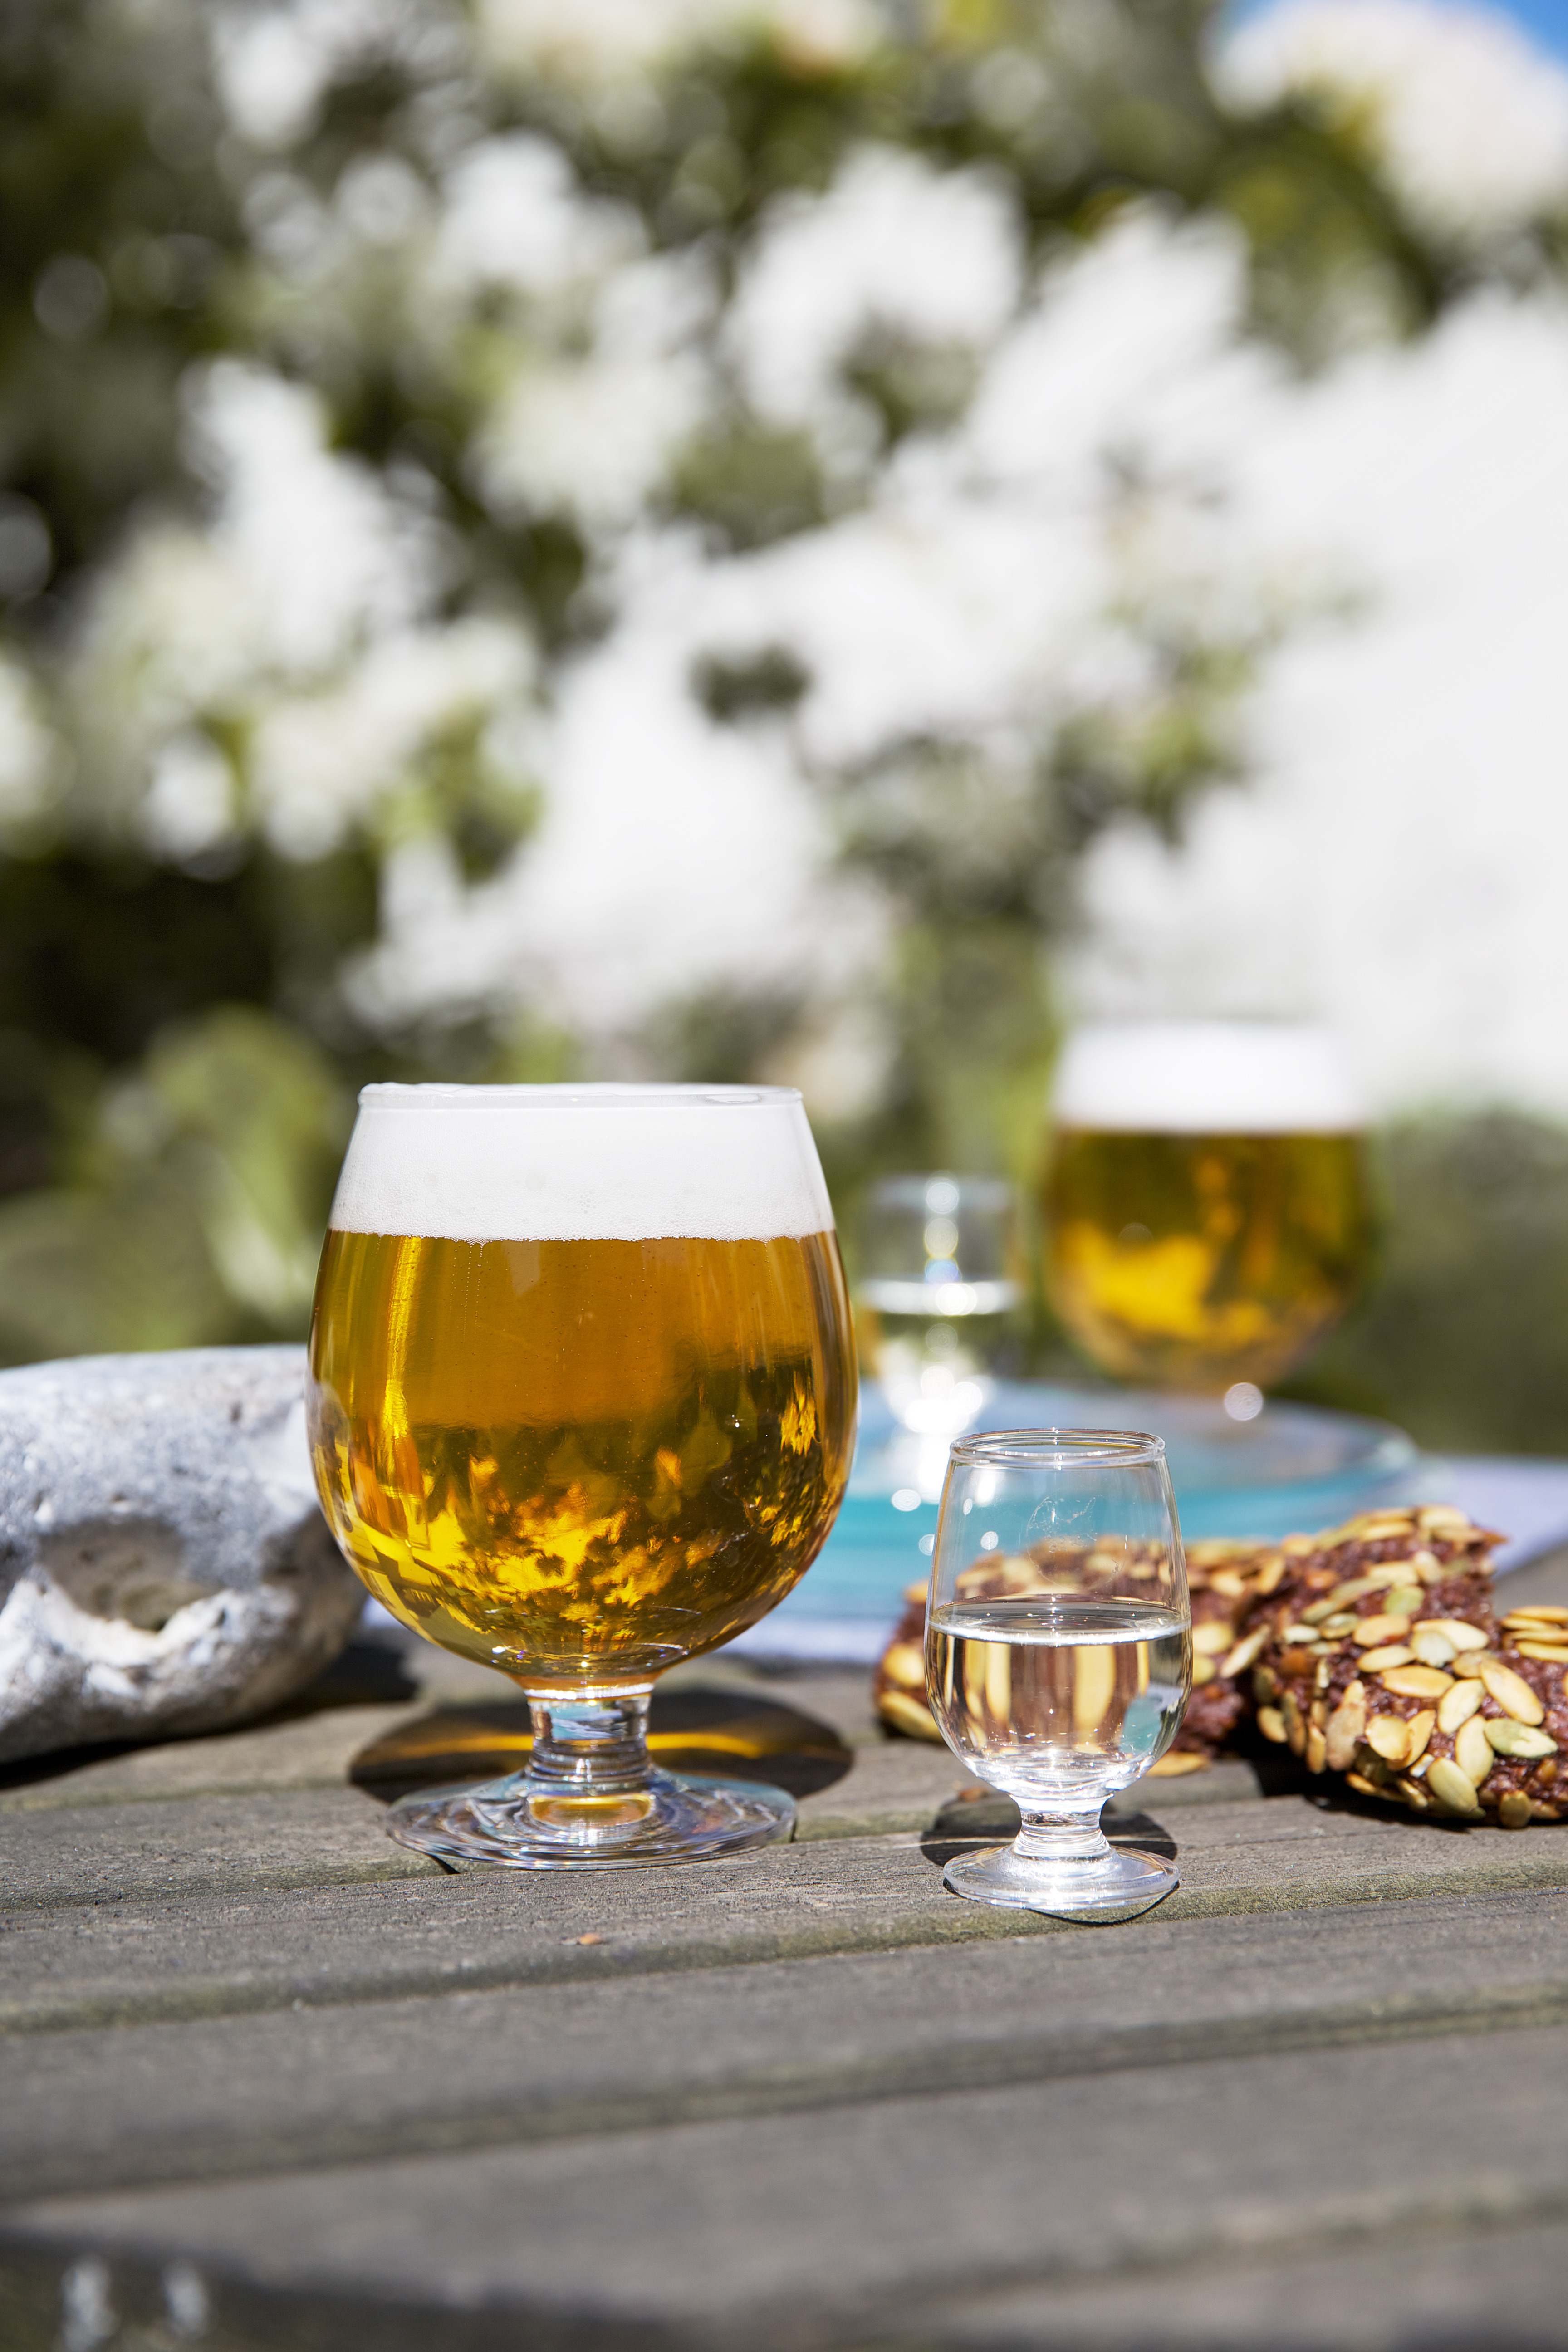 Beer glass from Det Danske Glas series, from Holmegaard